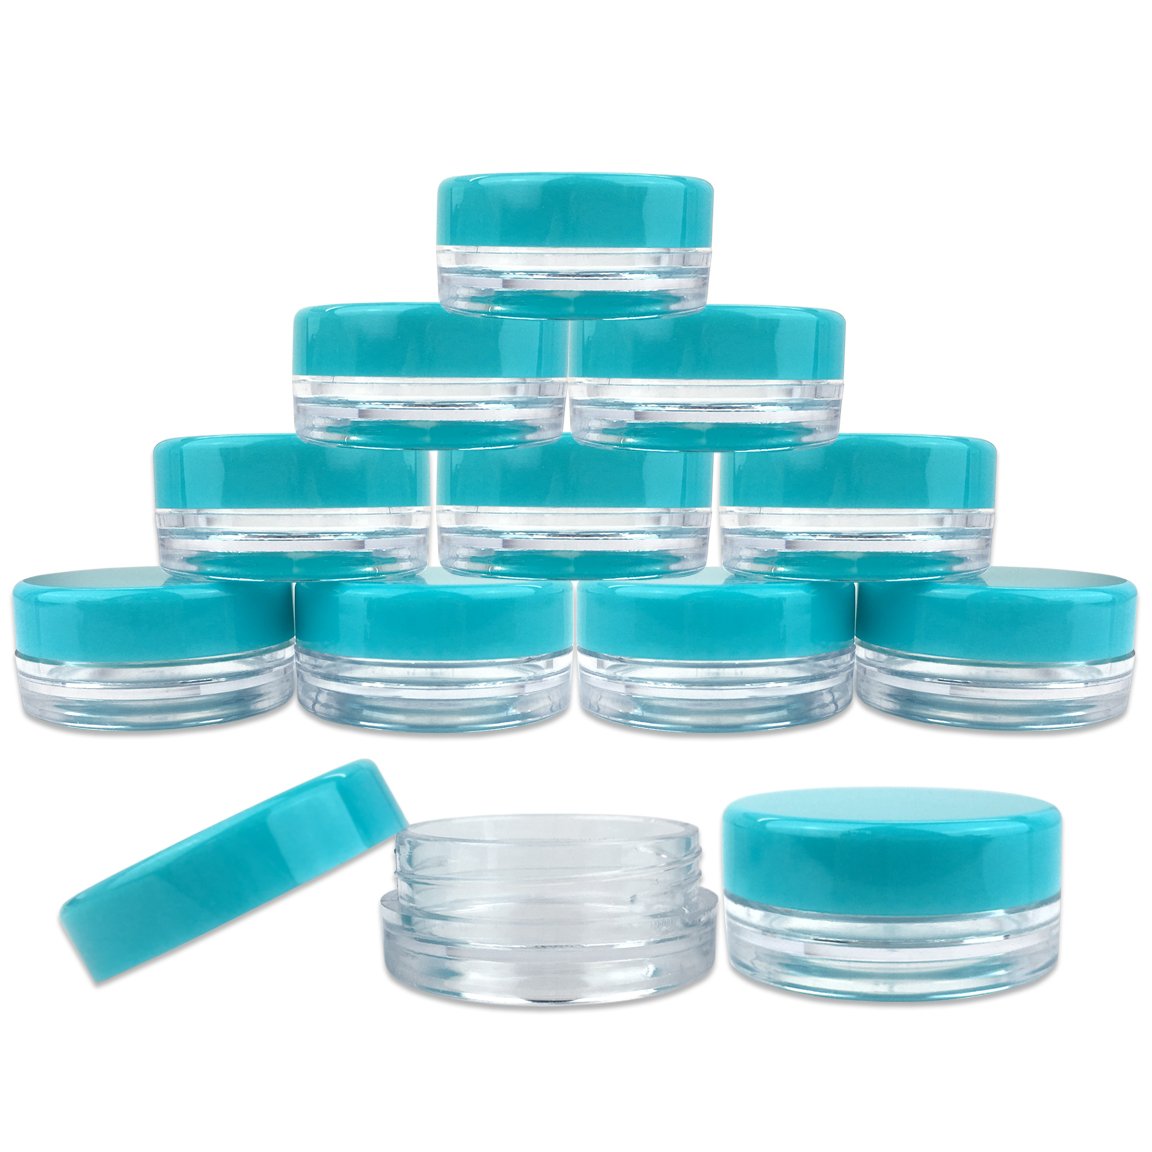 (100 Pieces Jars + Lid) Beauticom 3G/3ML Round Clear Jars with Teal Sky Blue Screw Cap Lids for Scrubs, Oils, Toner, Salves, Creams, Lotions, Makeup Samples, Lip Balms - BPA Free